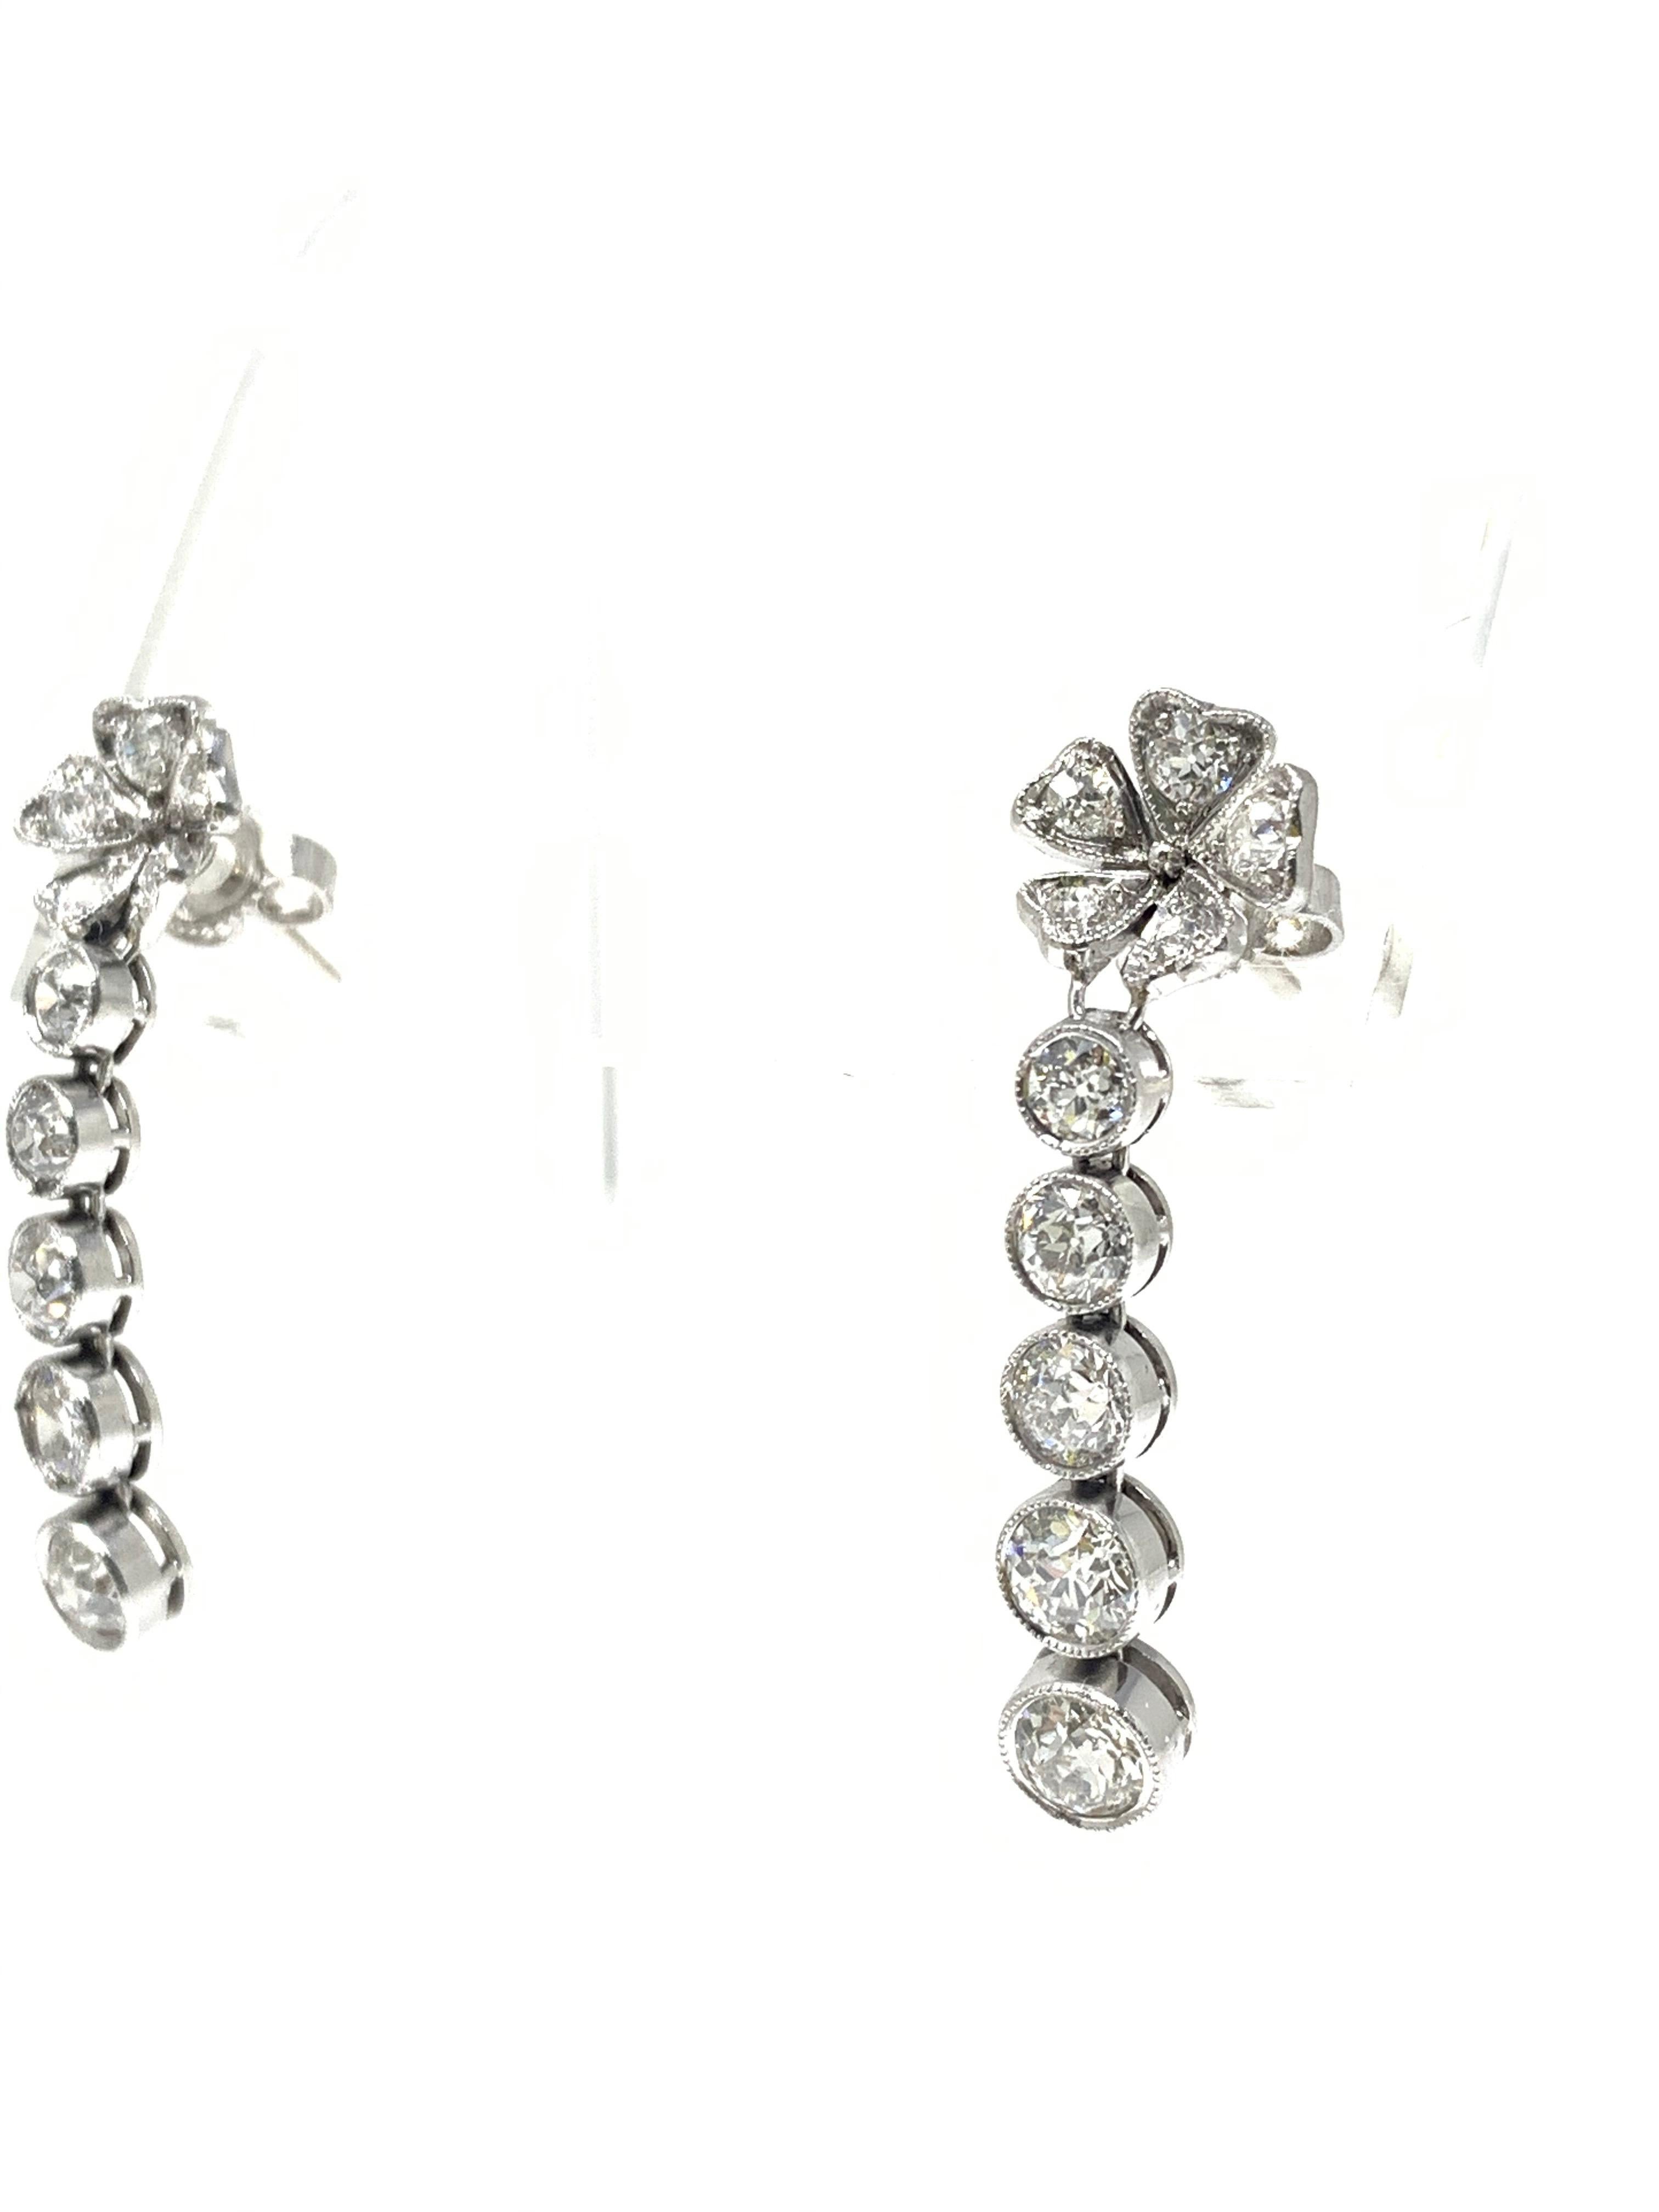 Women's or Men's 1930 Antique Old European Cut Diamond Earrings in Platinum